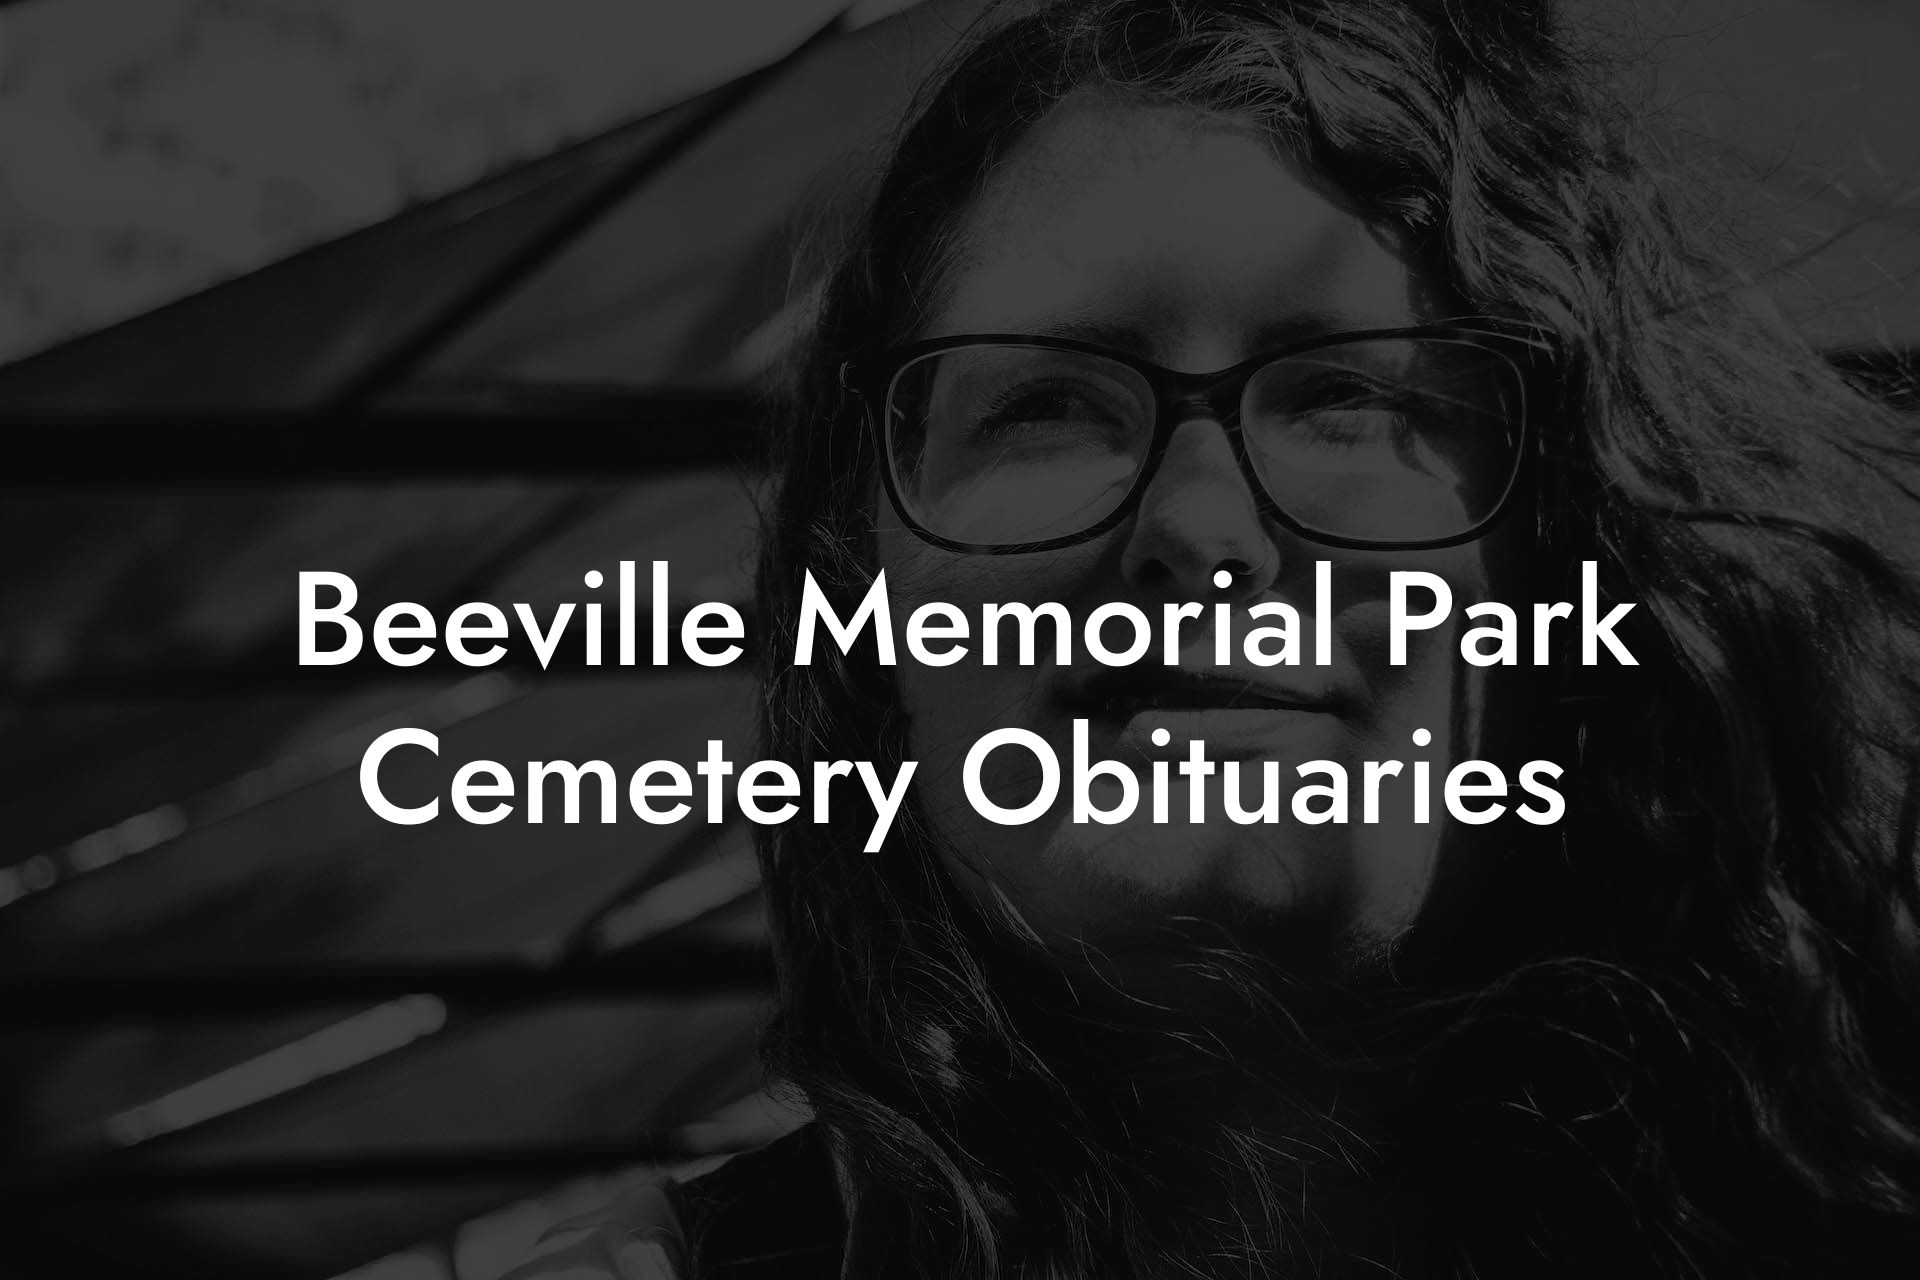 Beeville Memorial Park Cemetery Obituaries